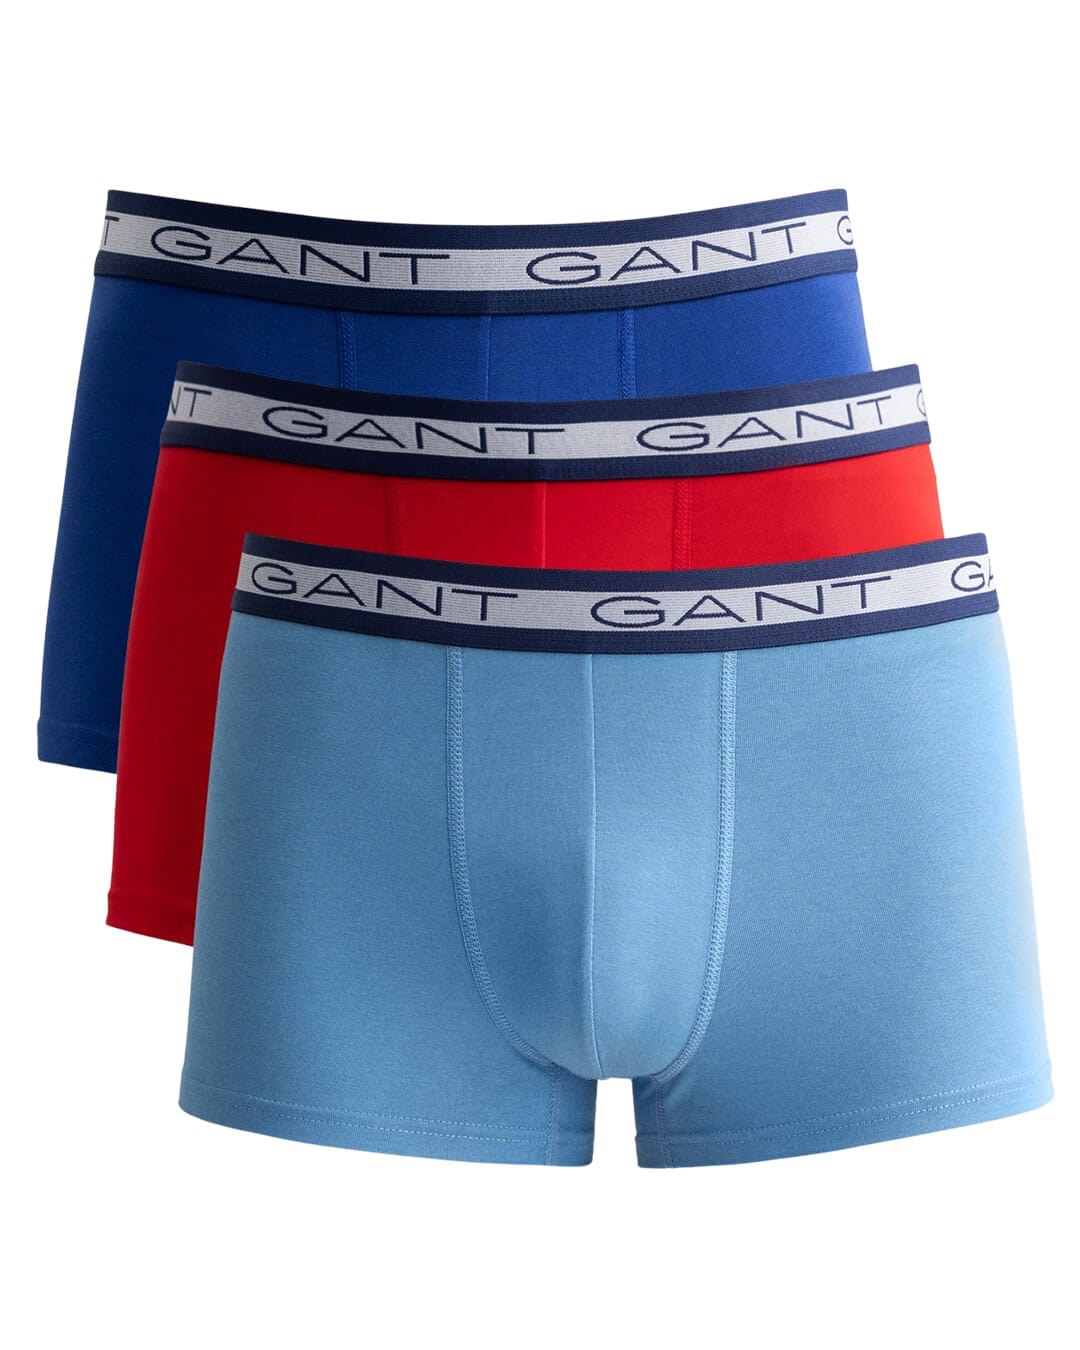 Gant Underwear Gant Red And Blue Basic Three-Pack Trunks